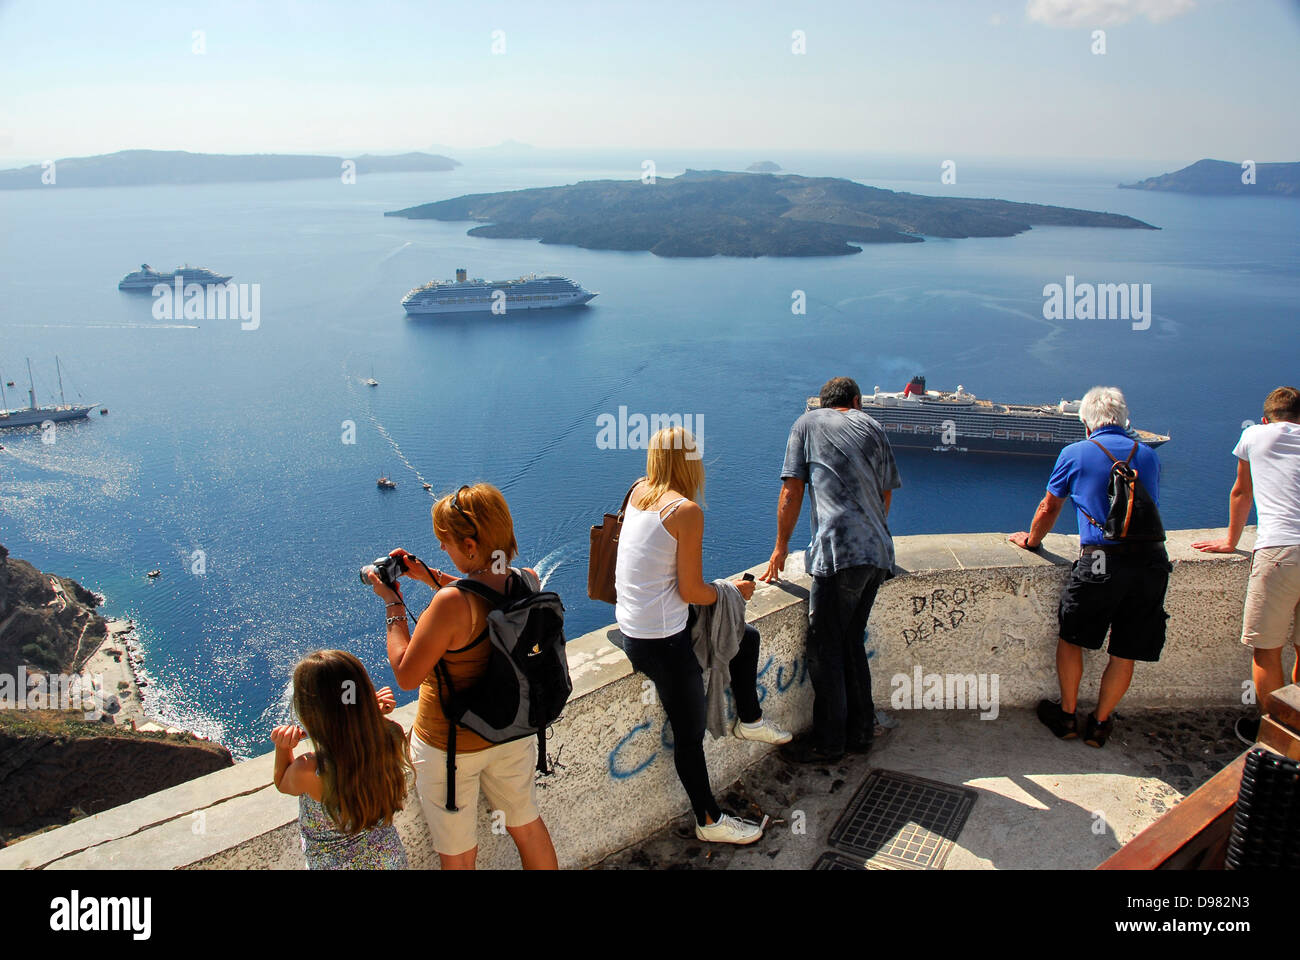 Cliff-top town of Fira on the Island of Santorini in the Aegean Sea, Greece Stock Photo